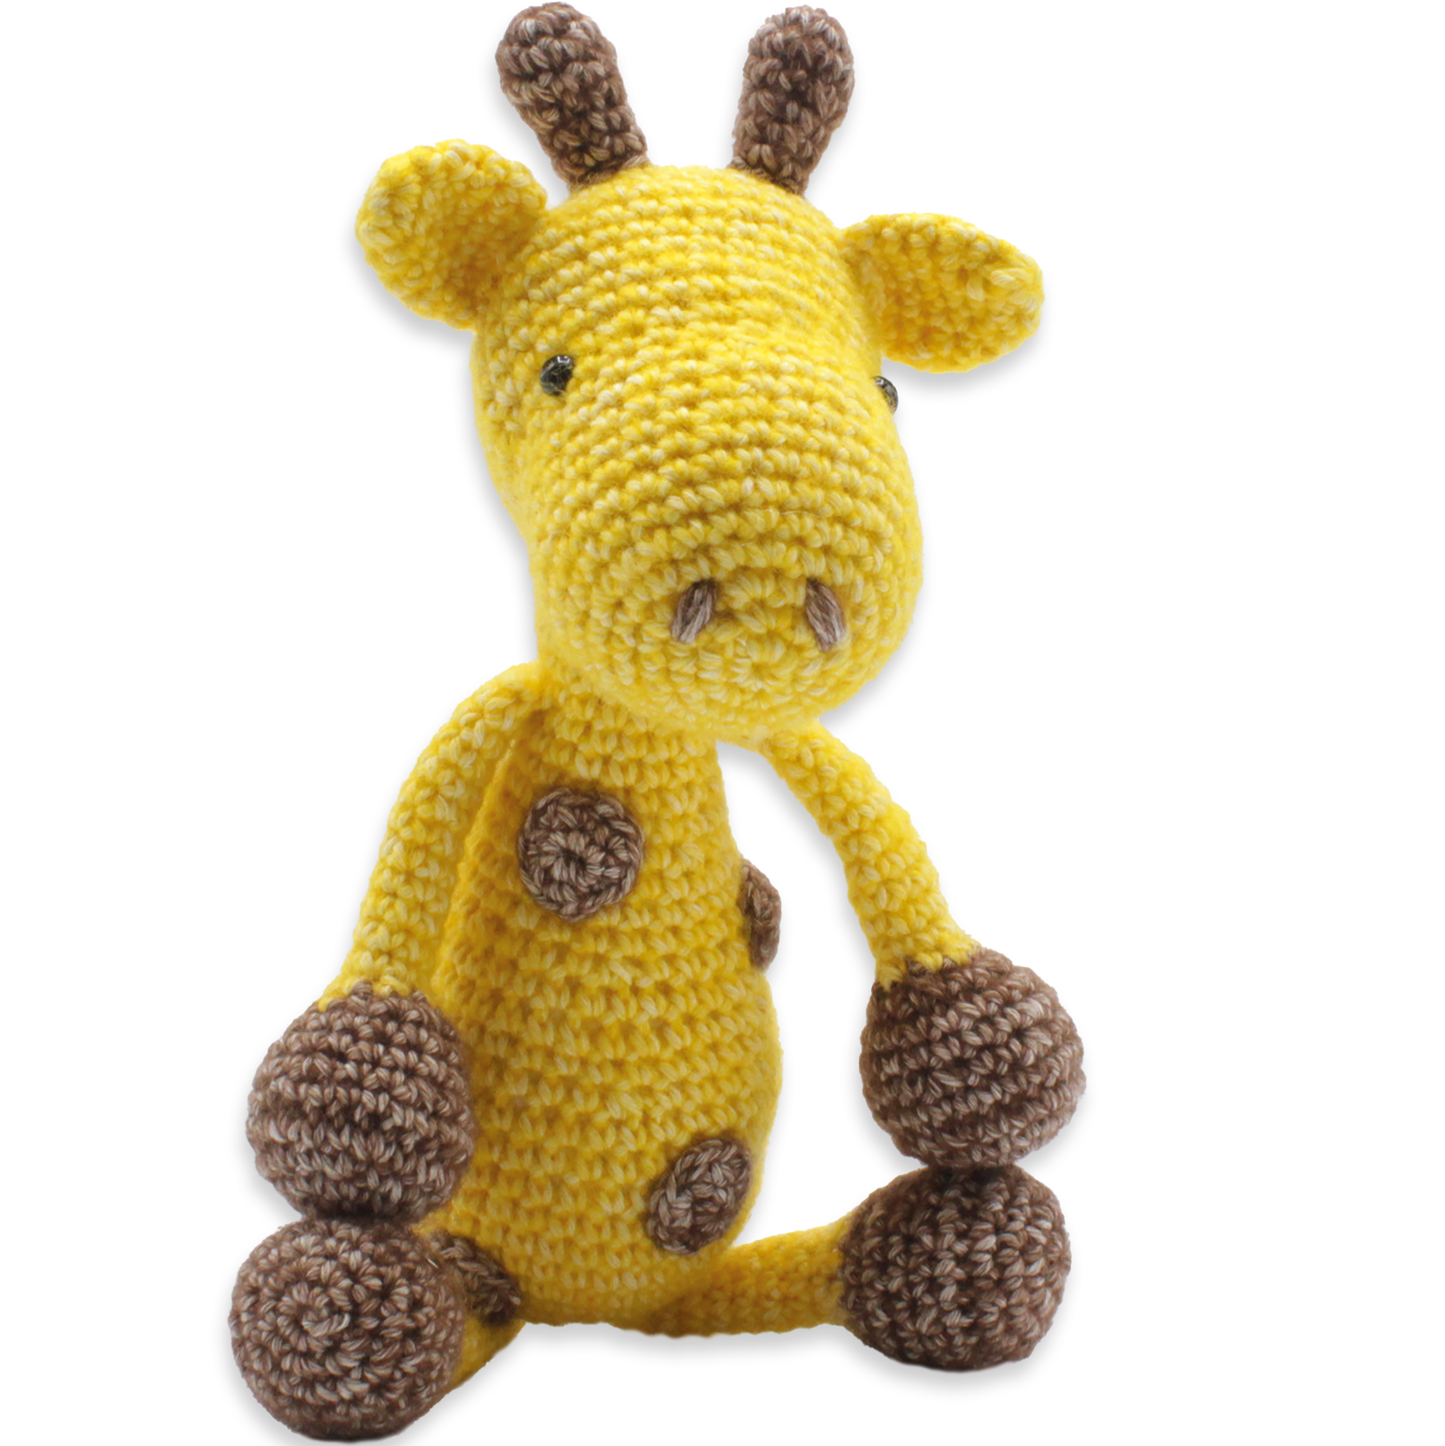 Hardicraft - DIY Crochet Kit - George Giraffe